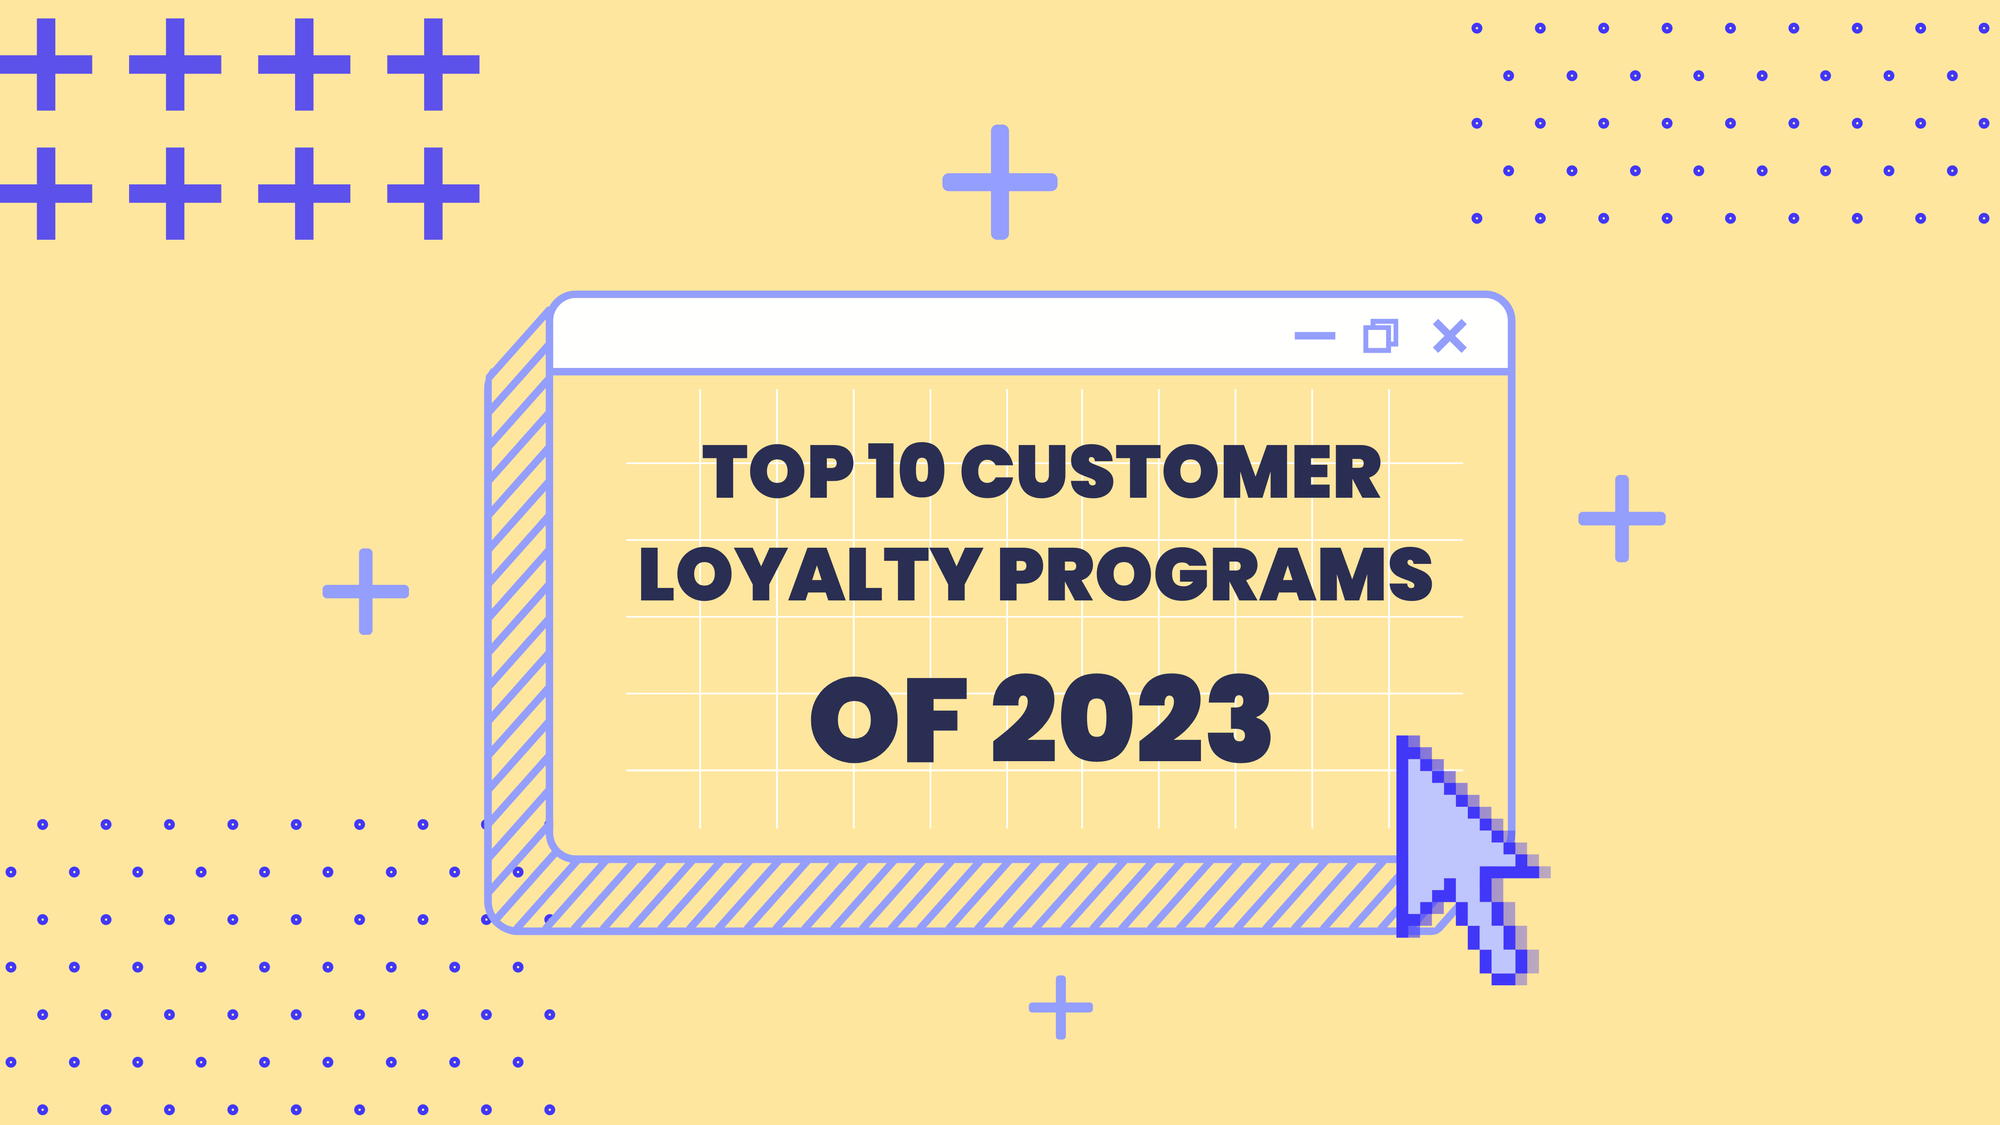 Top 10 Customer Loyalty Programs of 2023